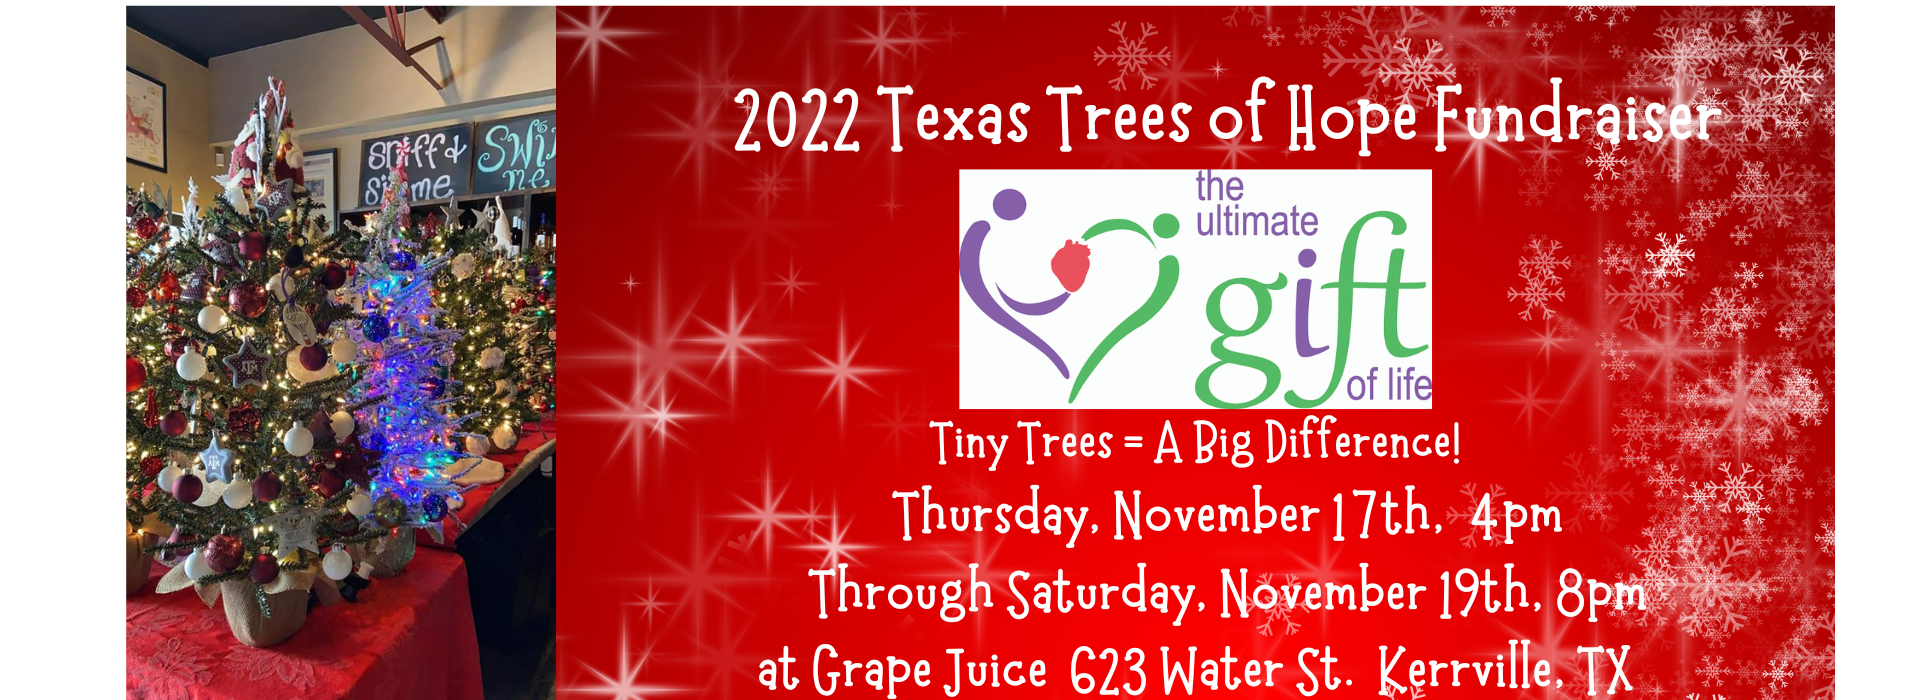 2022 Texas Trees of Hope Fundraiser